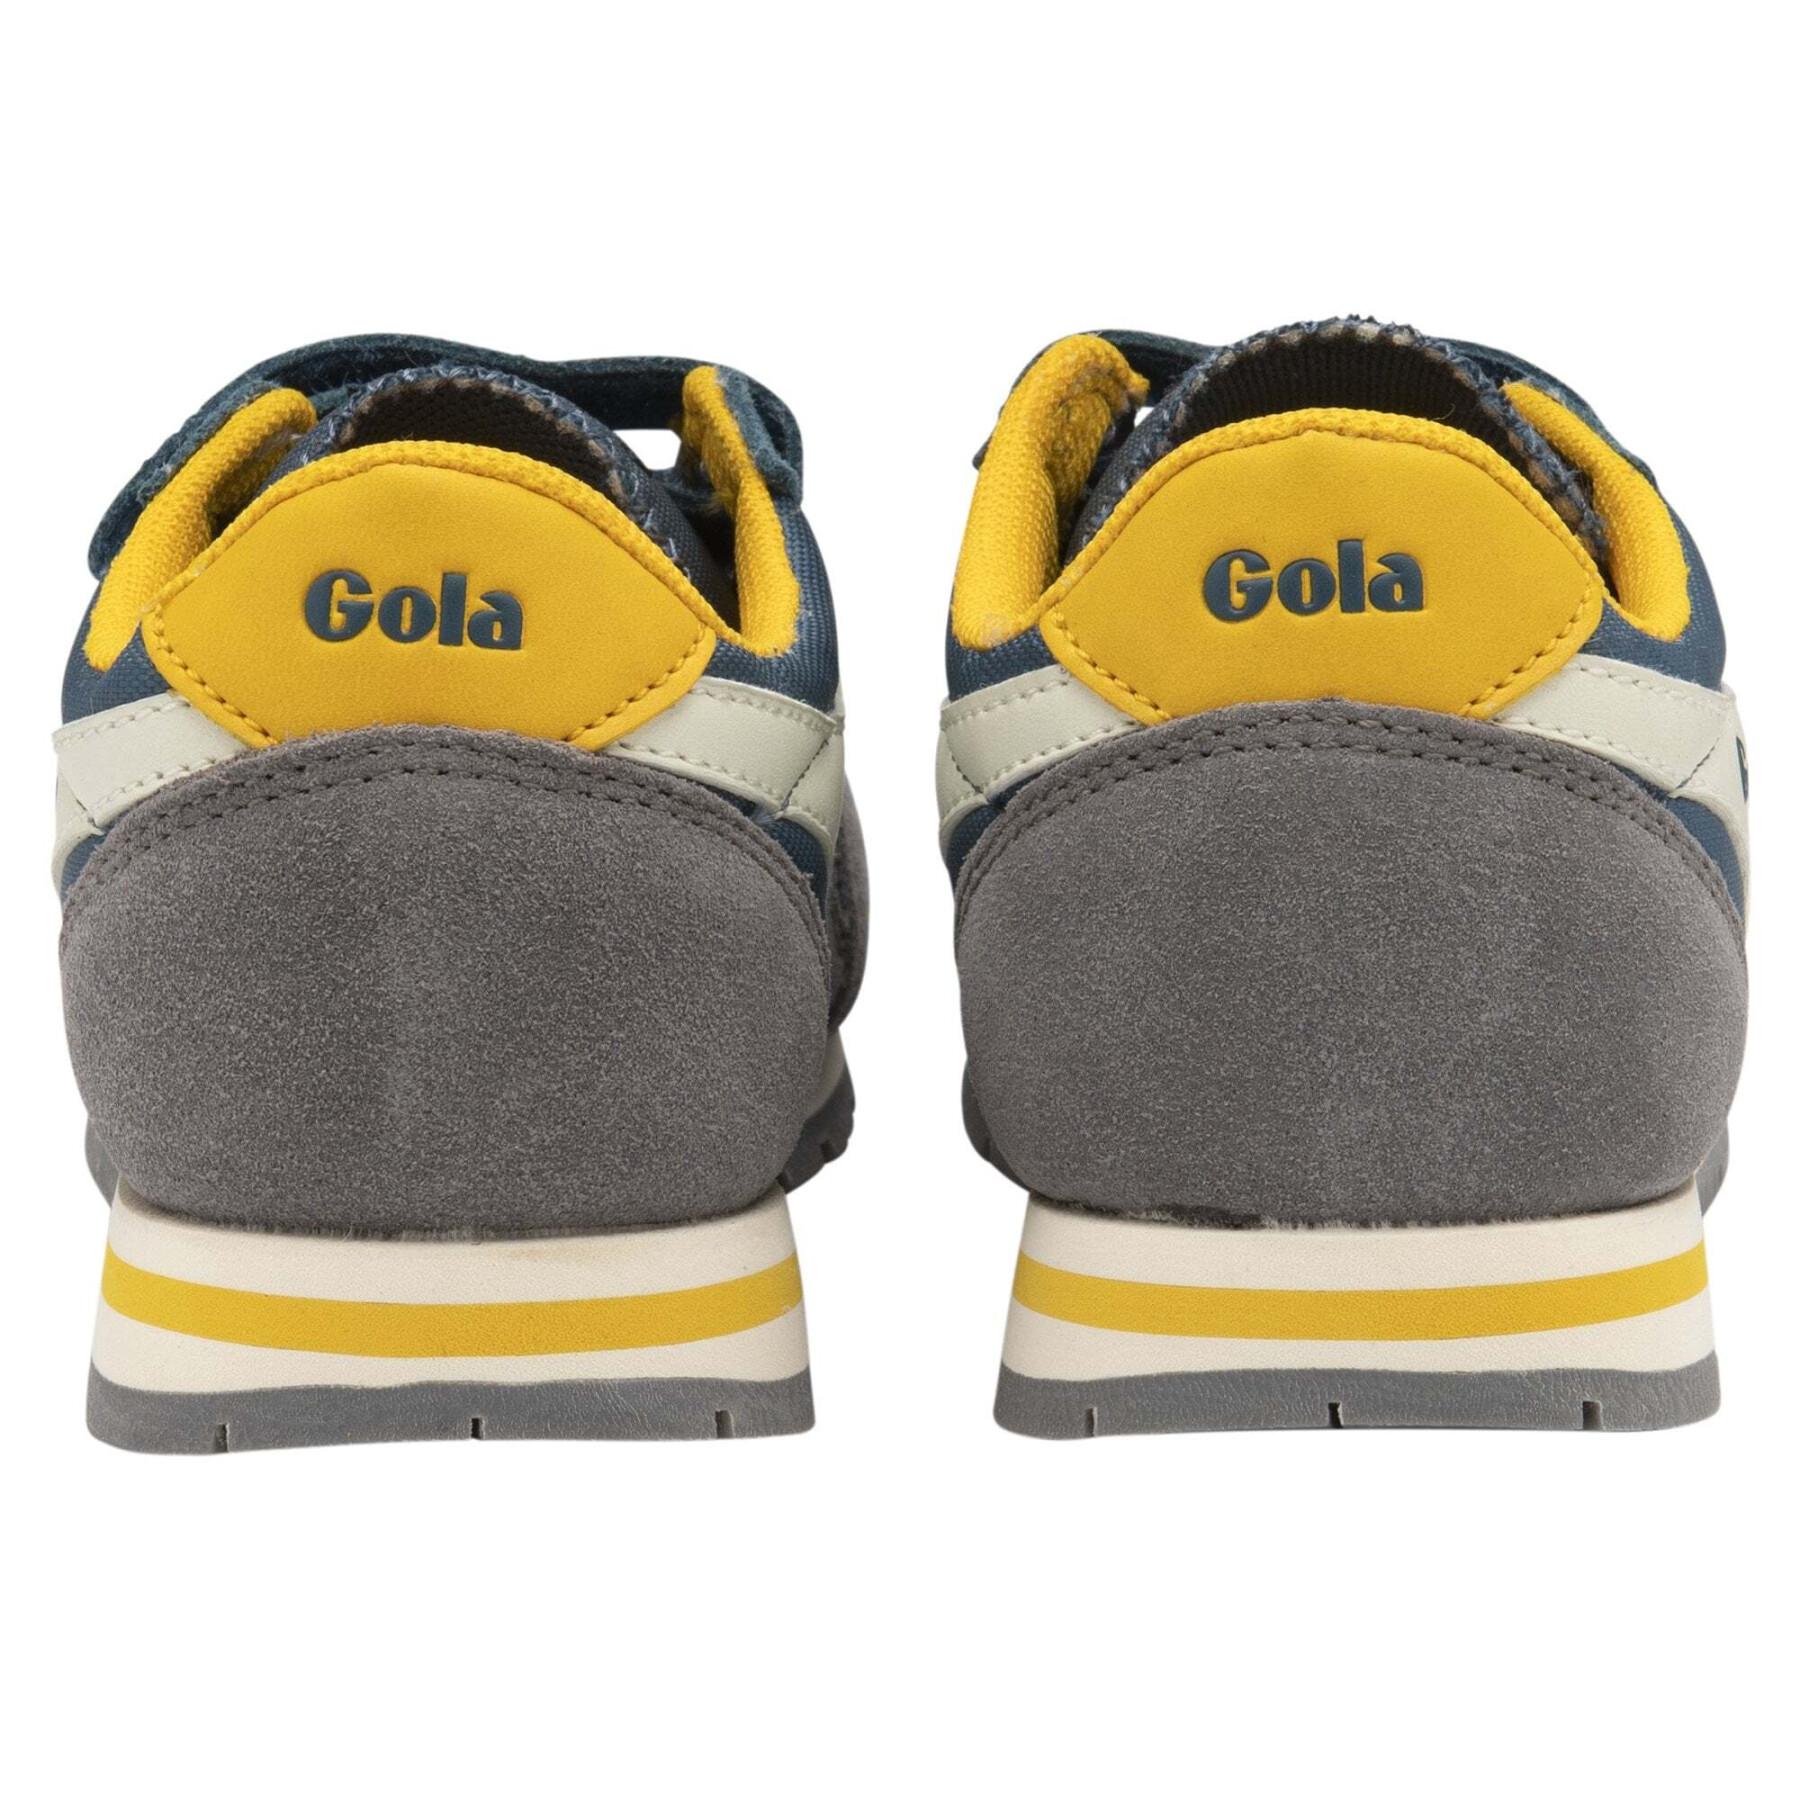 Children's sneakers Gola Daytona